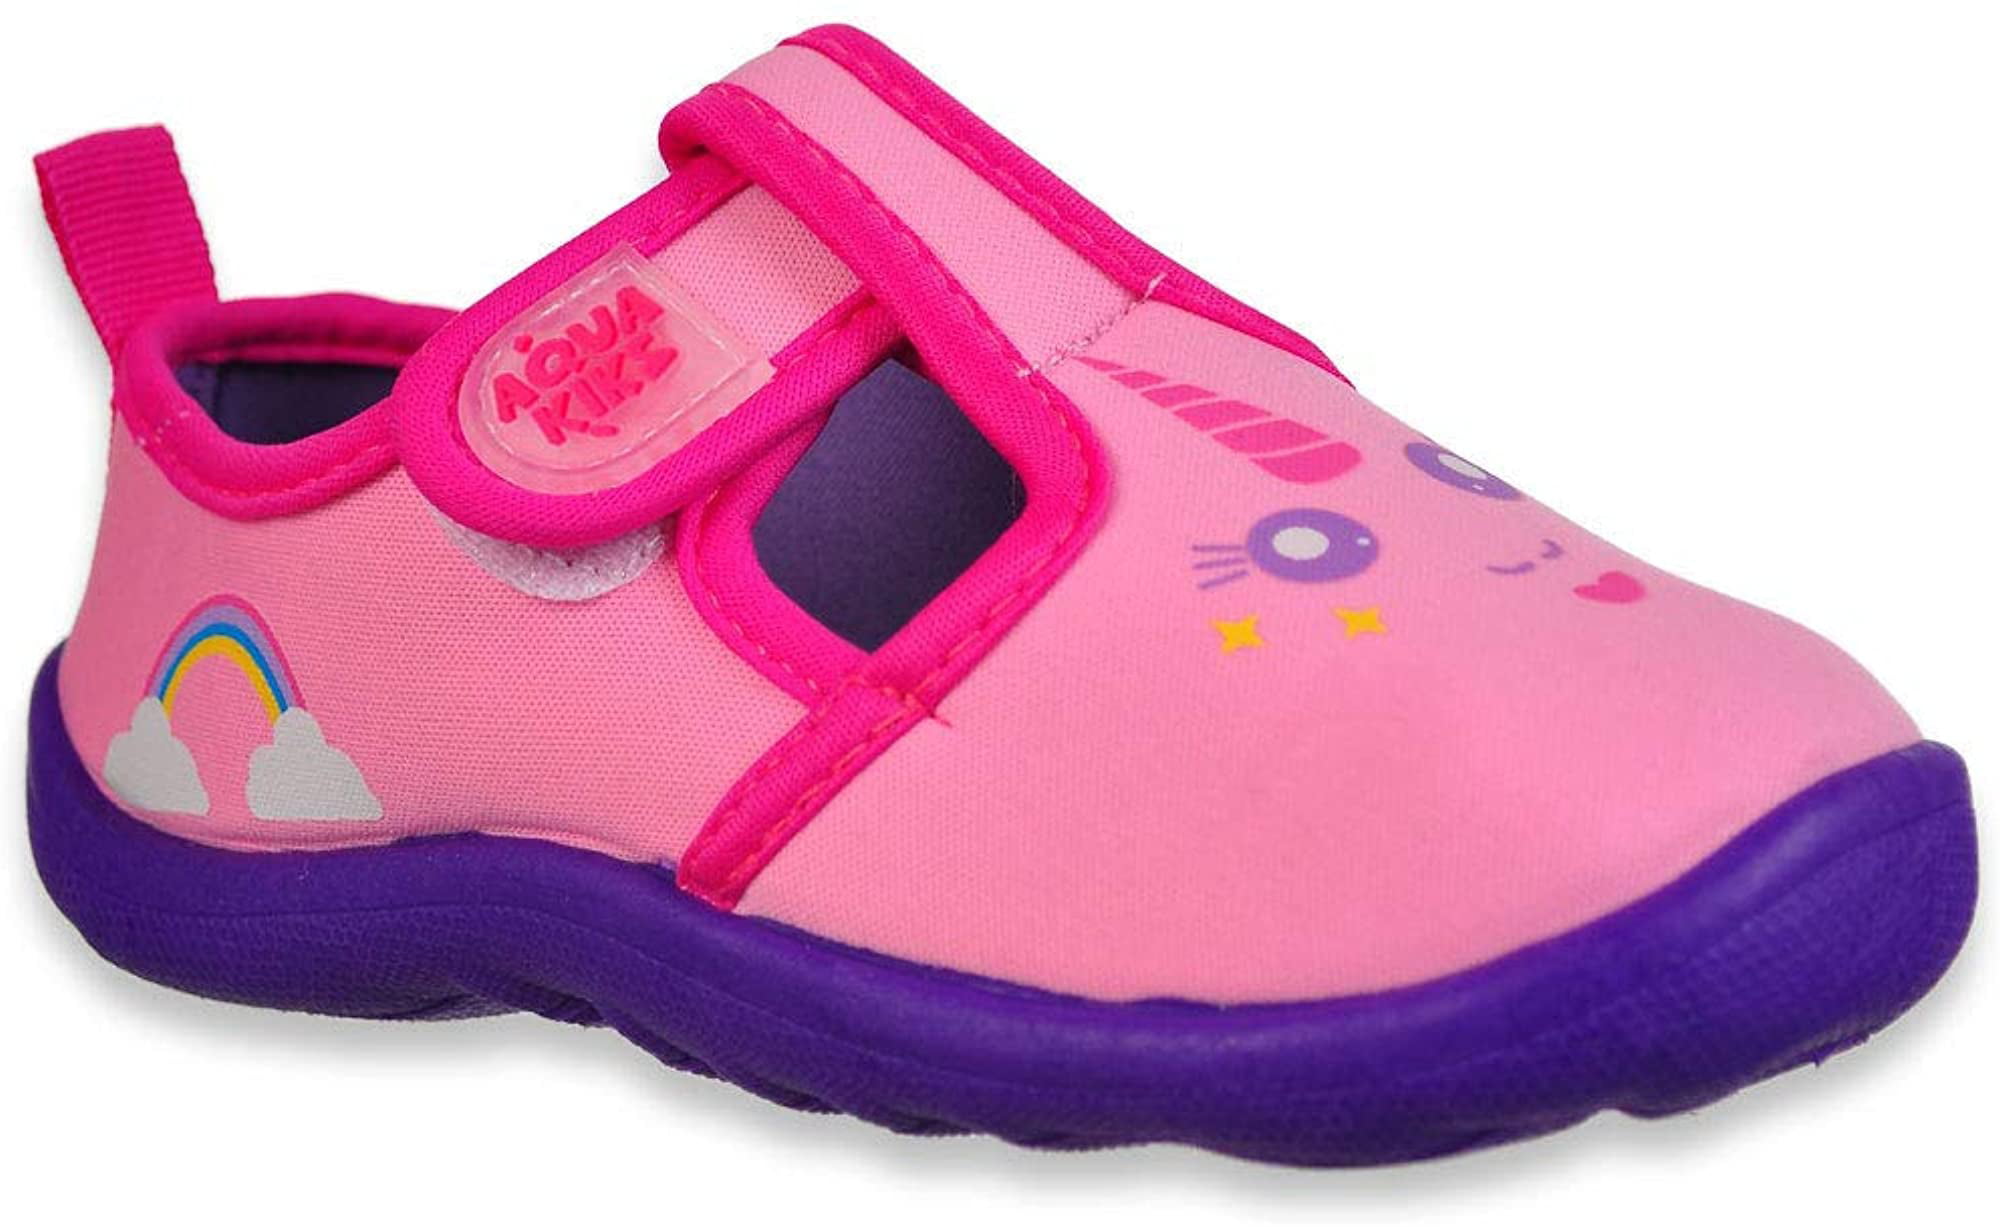 Kids Waterproof Sandals Aquakiks Water Aqua Shoes for Boys & Girls